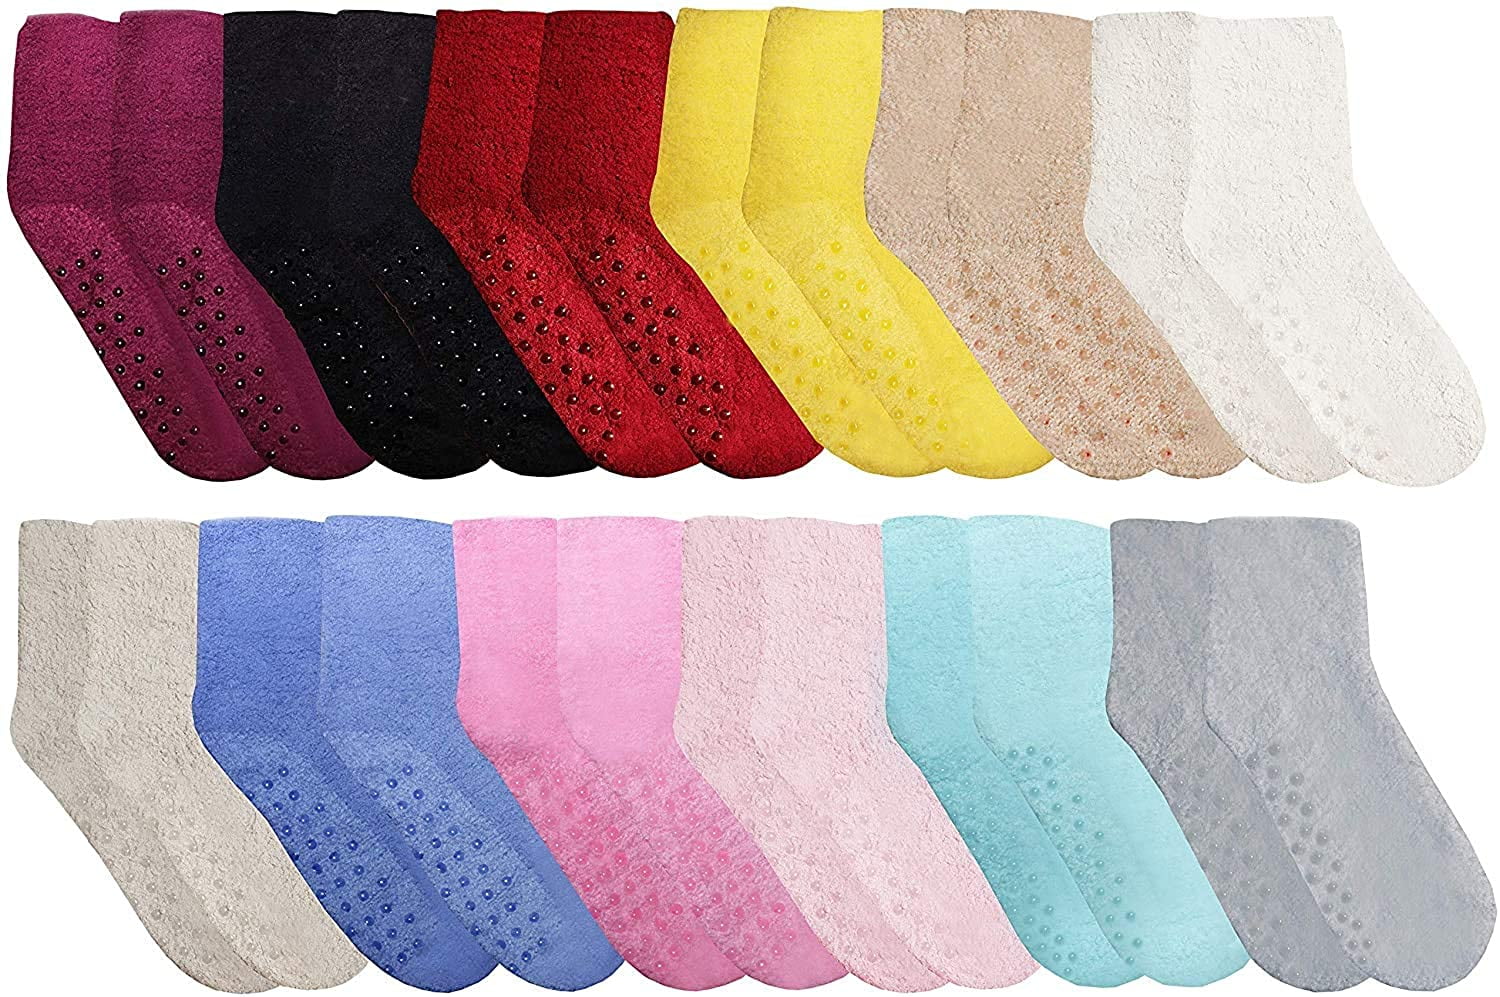 SOCKS'NBULK Women Winter Fuzzy Non Skid Gripper Socks, Warm Butter Soft  Solid Colors, 9-11 